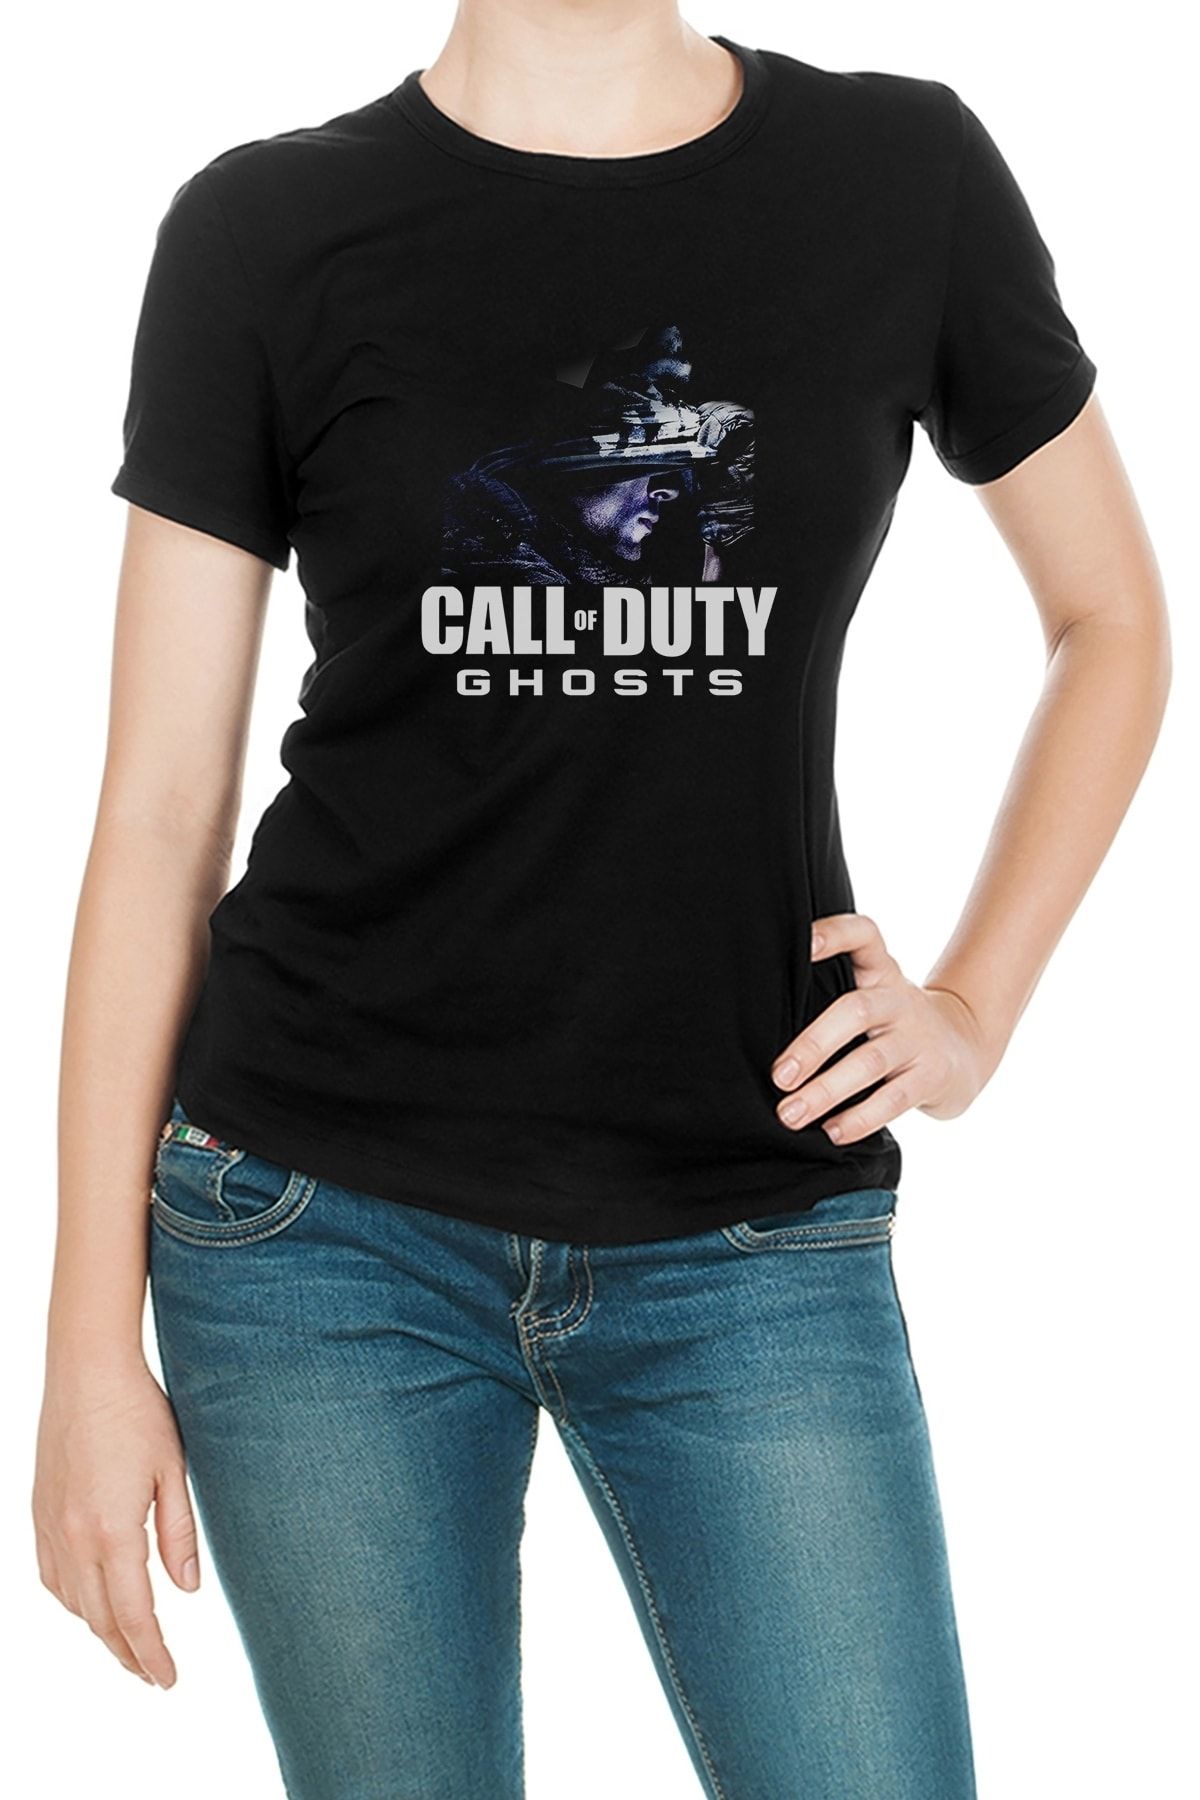 QIVI Call Of Duty Ghosts Baskılı Siyah Kadın Örme Tshirt T-shirt Tişört T Shirt